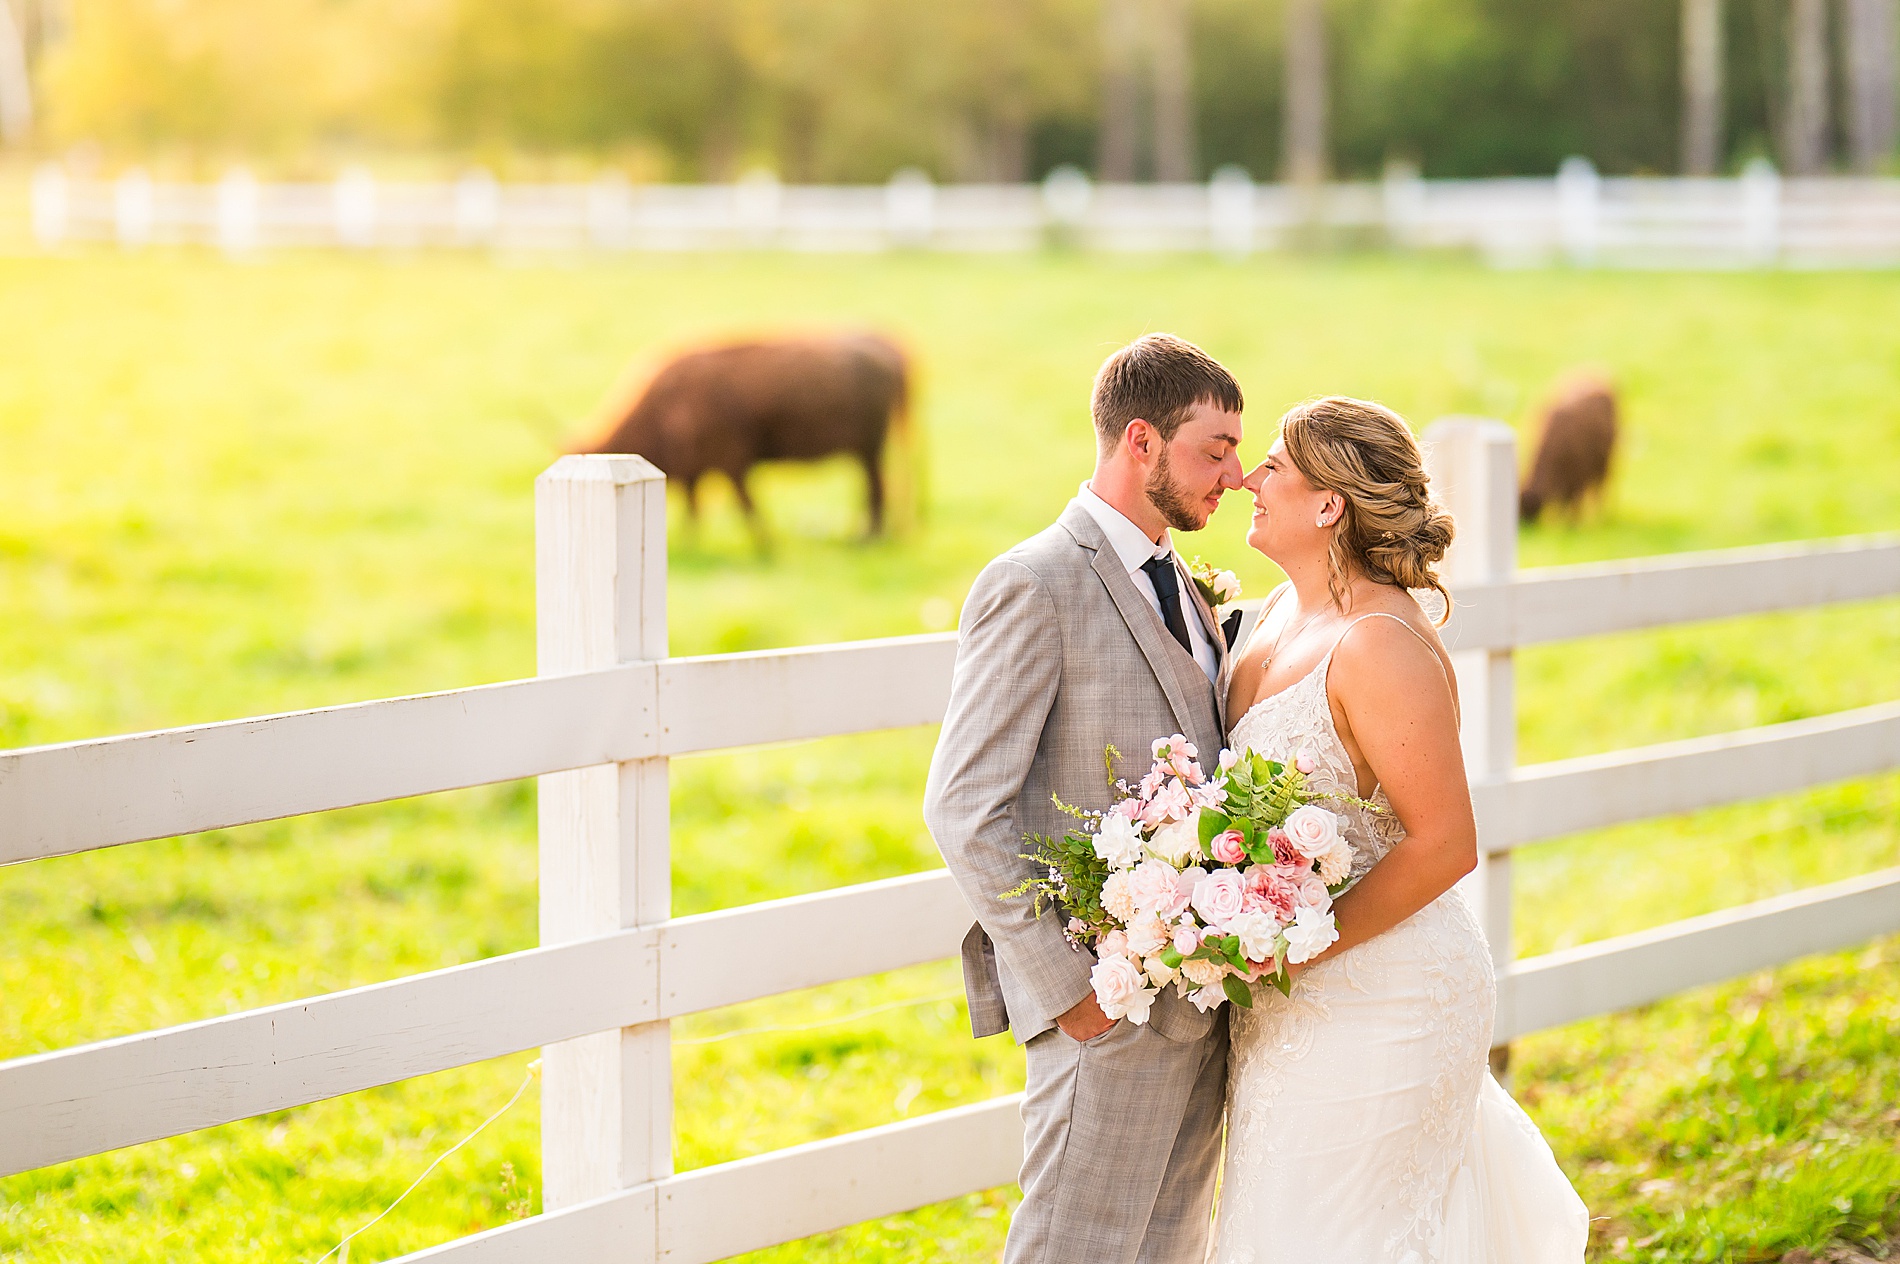 newlyweds kiss by fence on farm 